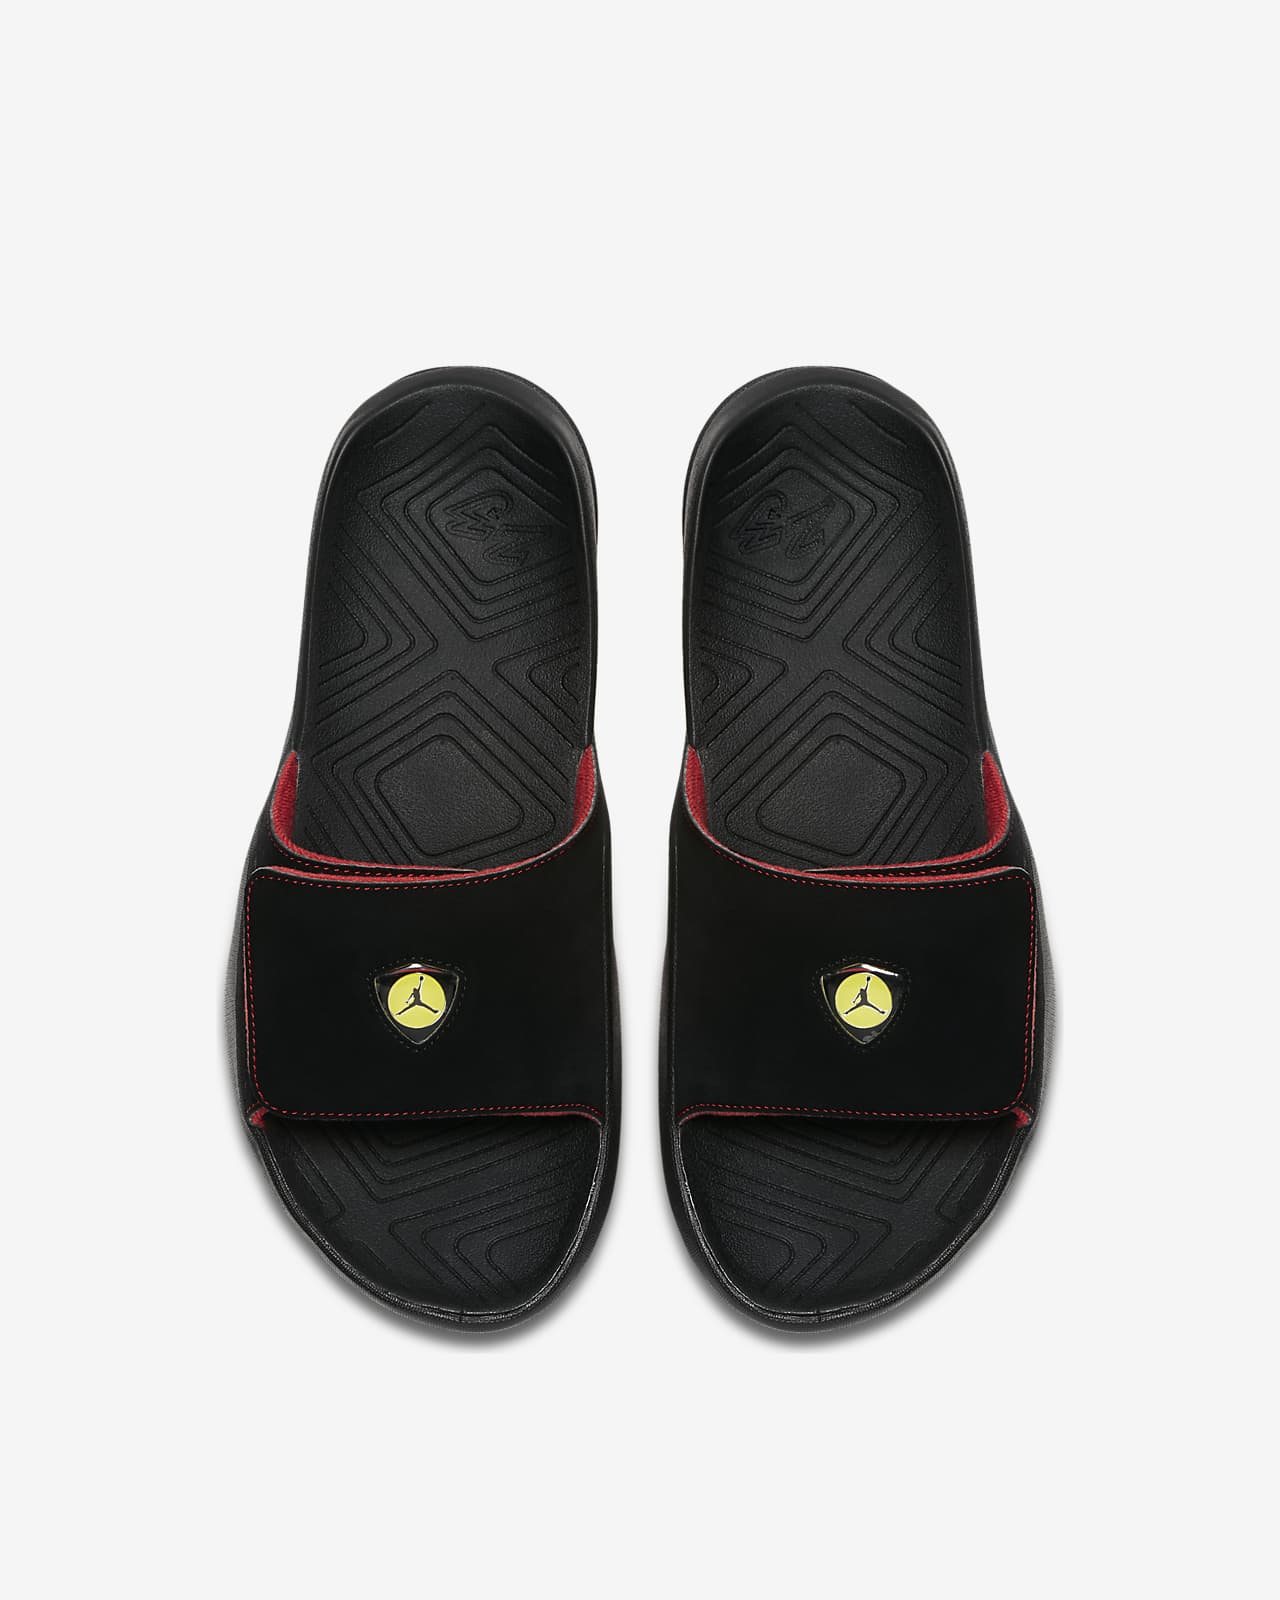 Jordan Hydro 7 Slide. Nike